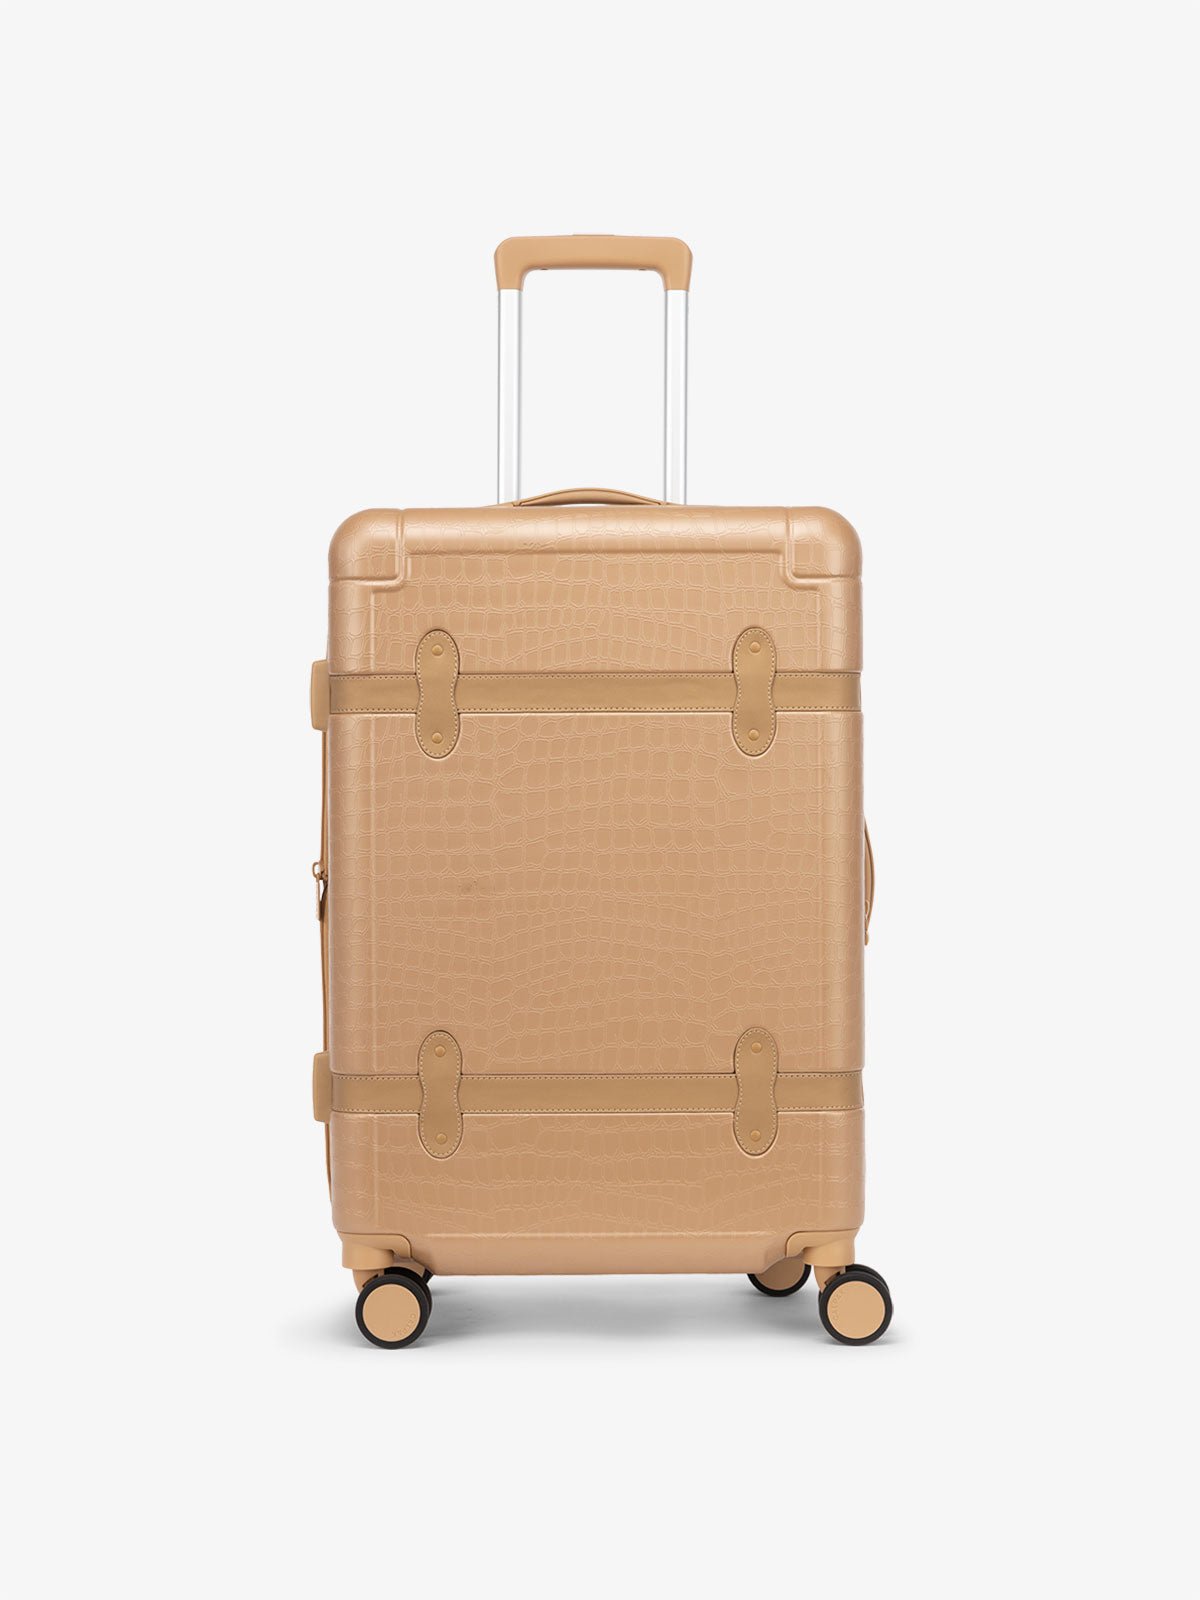 CALPAK TRNK medium 25 inch beige almond luggage in vintage trunk style